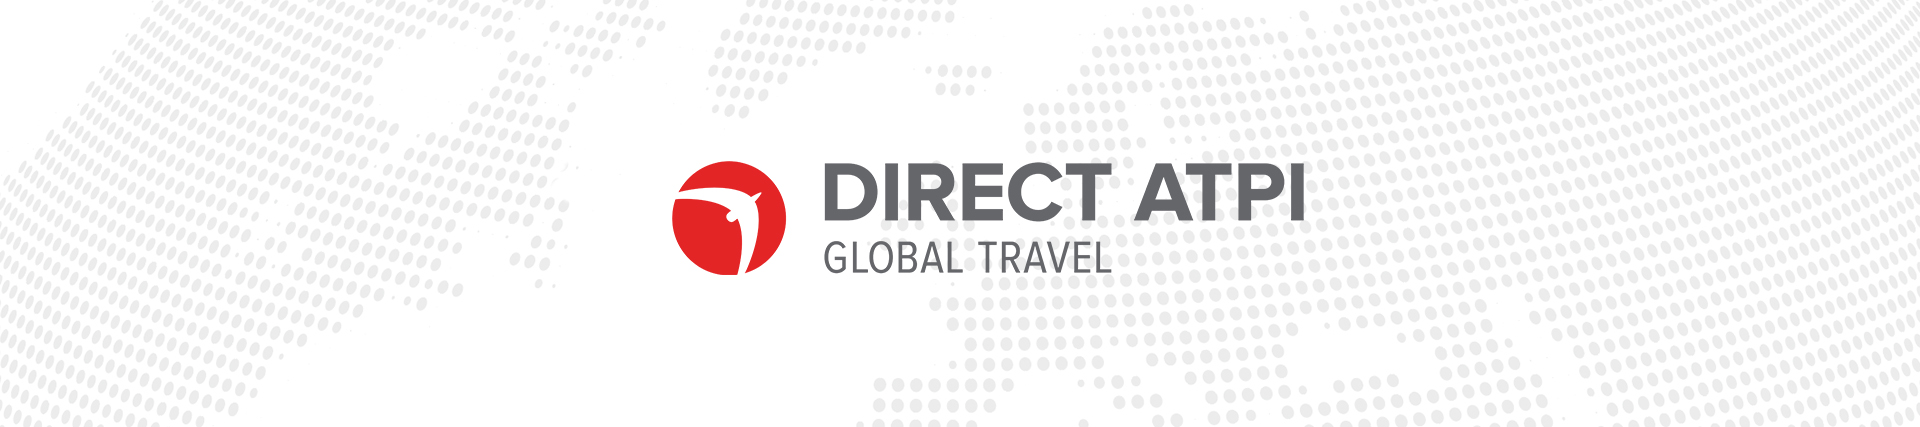 Global Travel Management Services